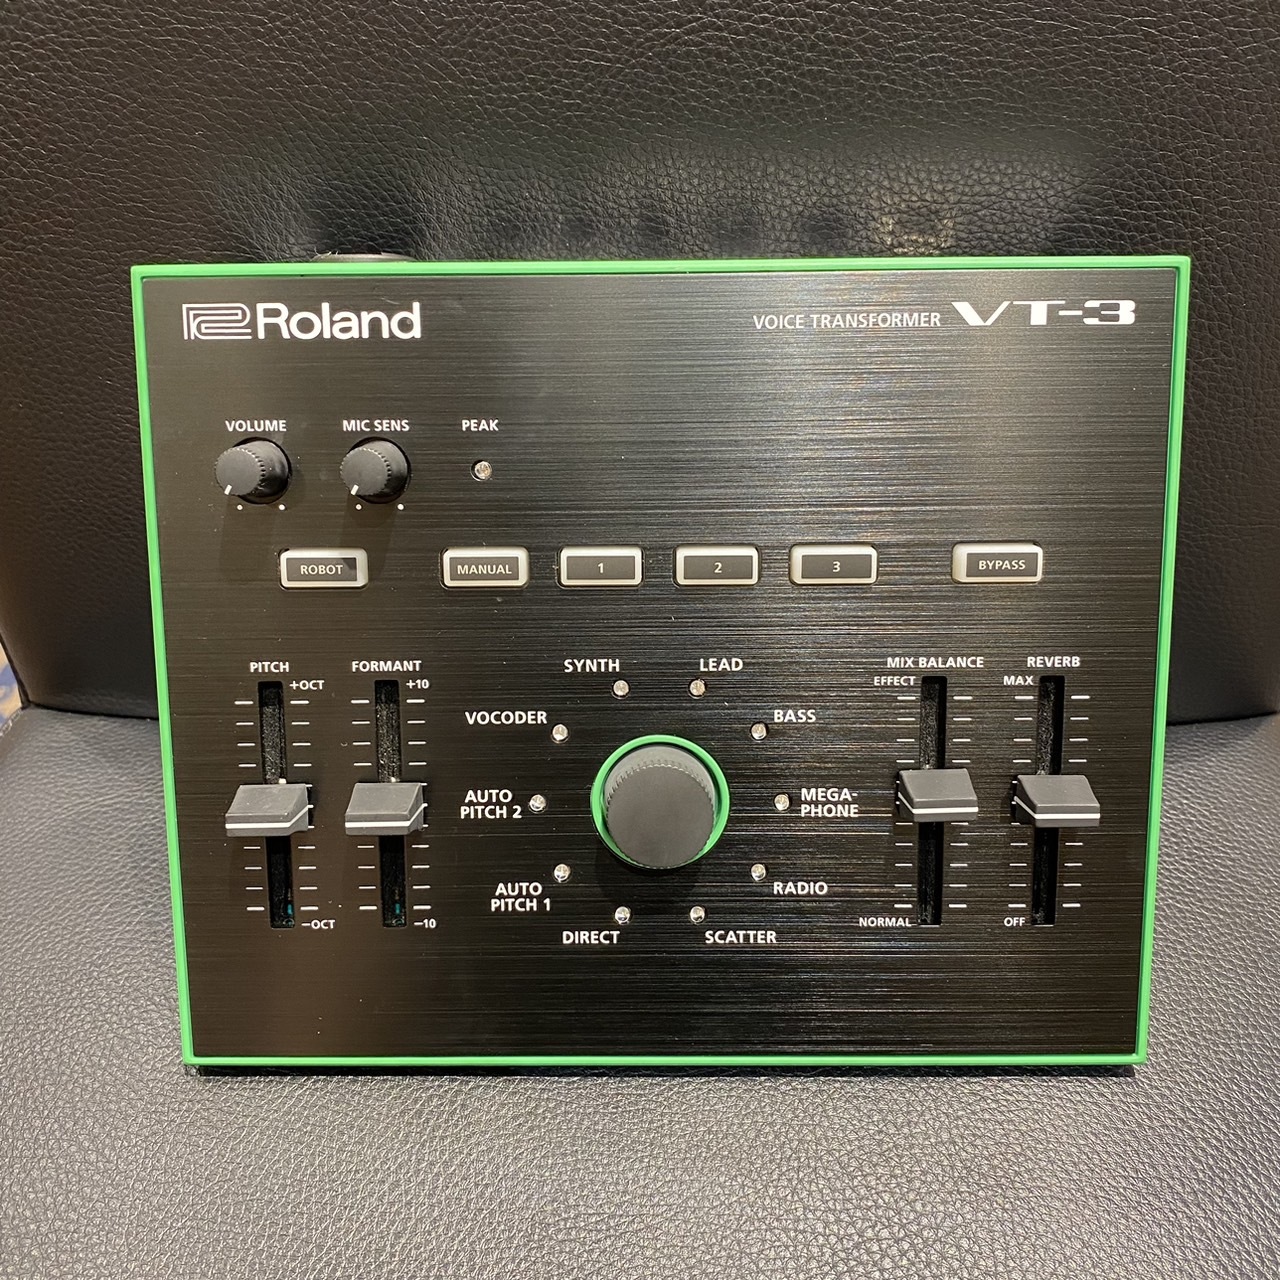 Roland VT-3 VOICE TRANSFORMER喫煙者はおりません - DJ機器